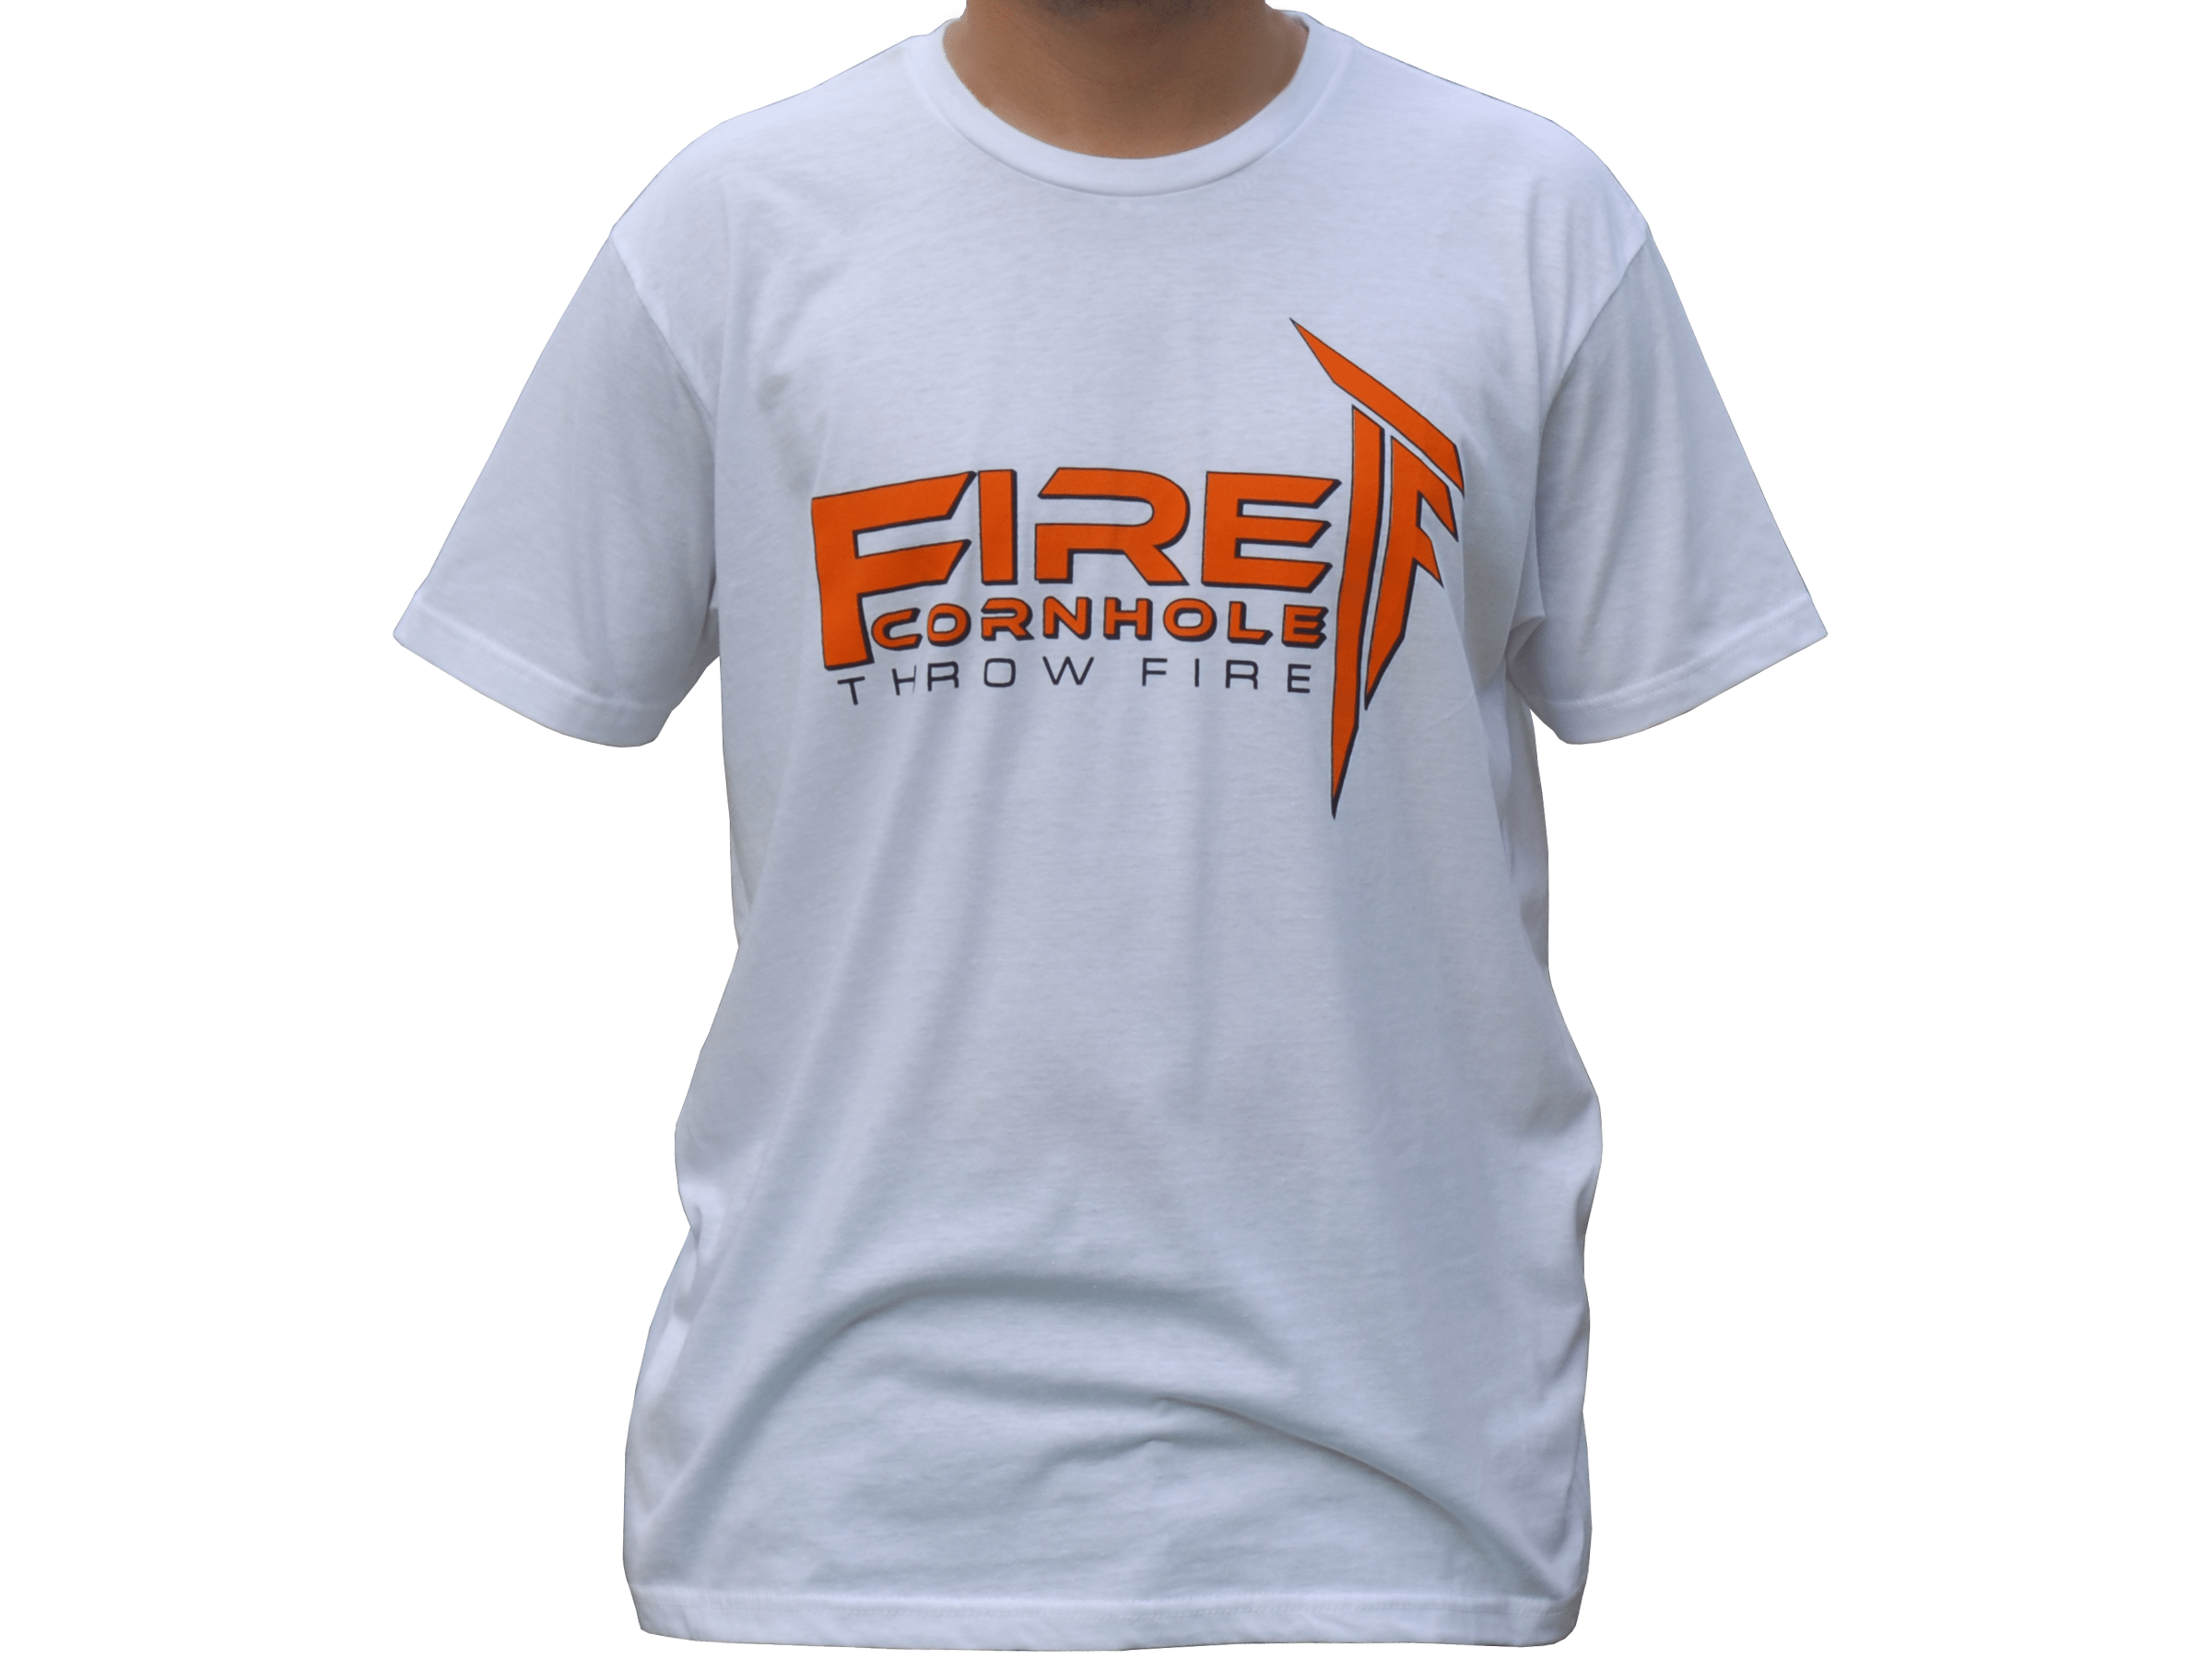 White T-shirt with orange Fire Cornhole logo